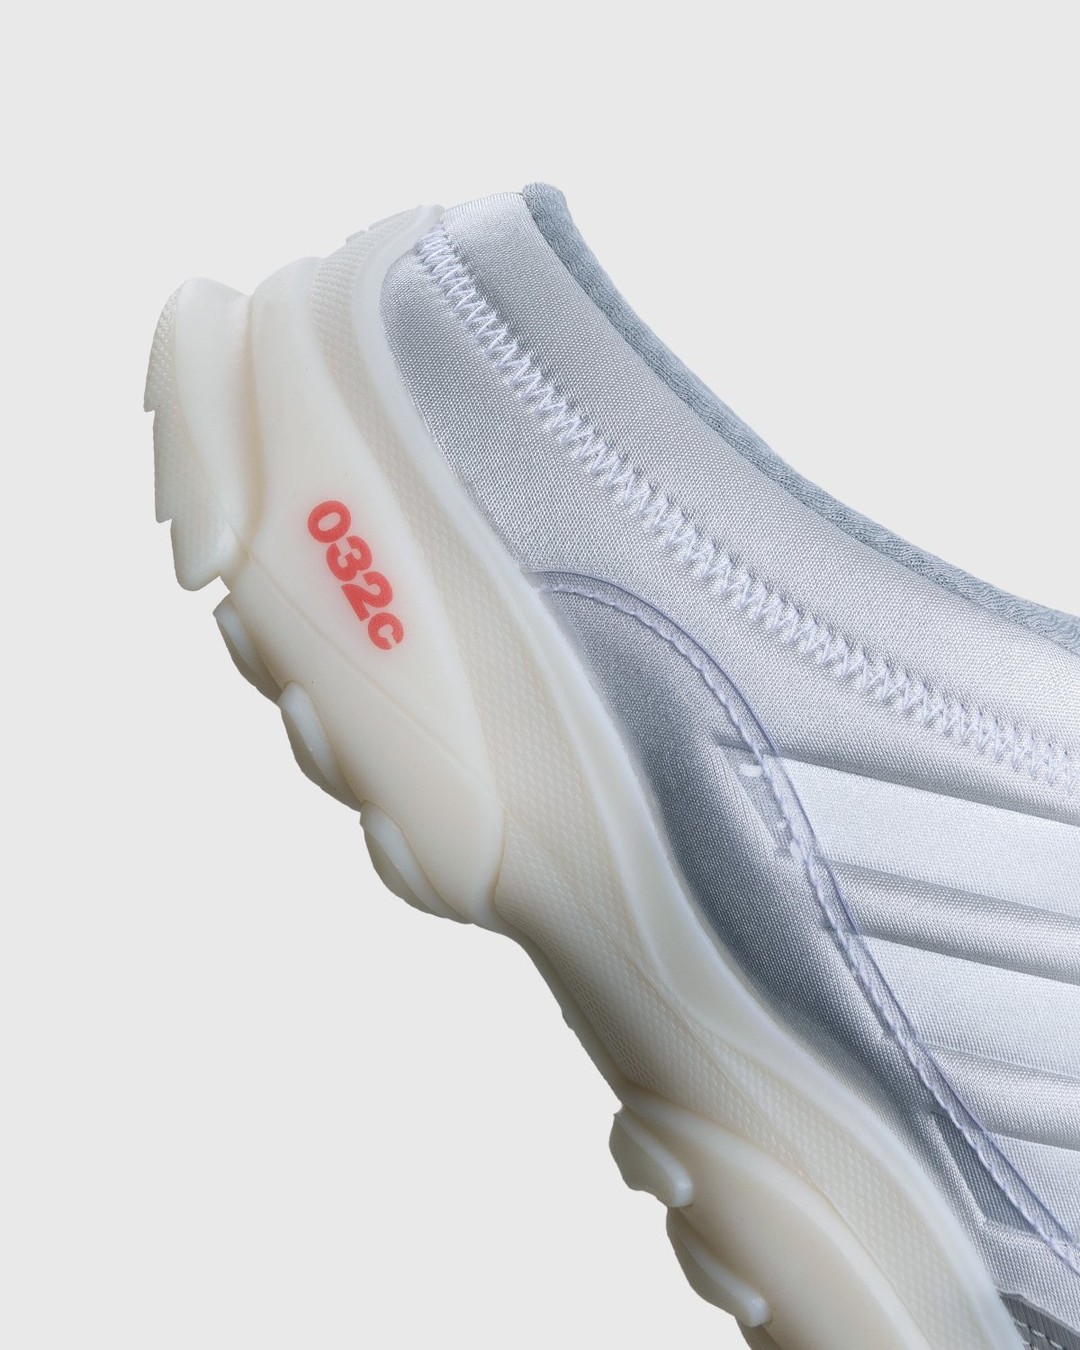 Adidas x 032c – GSG Mule Greone - Shoes - White - Image 5